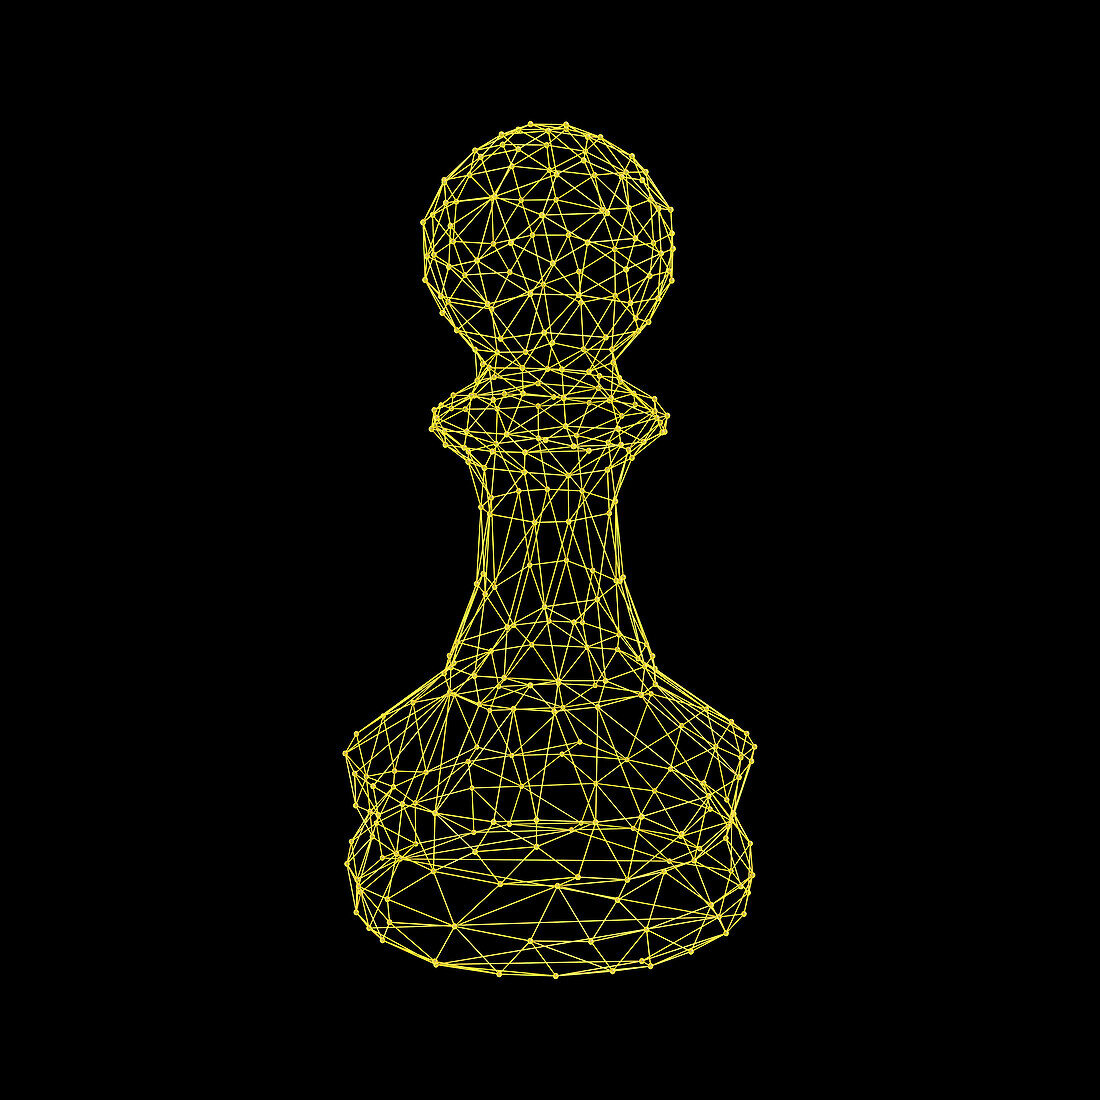 Chess pawn, illustration